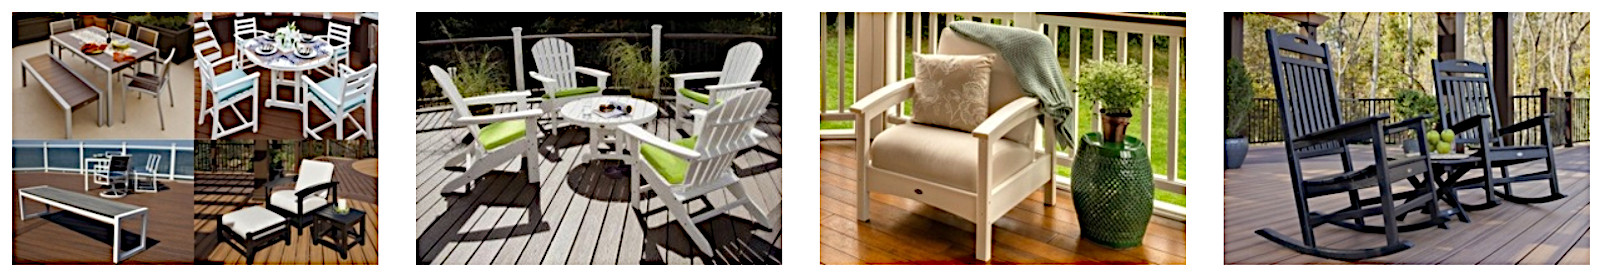 Trex outdoor furniture economical price